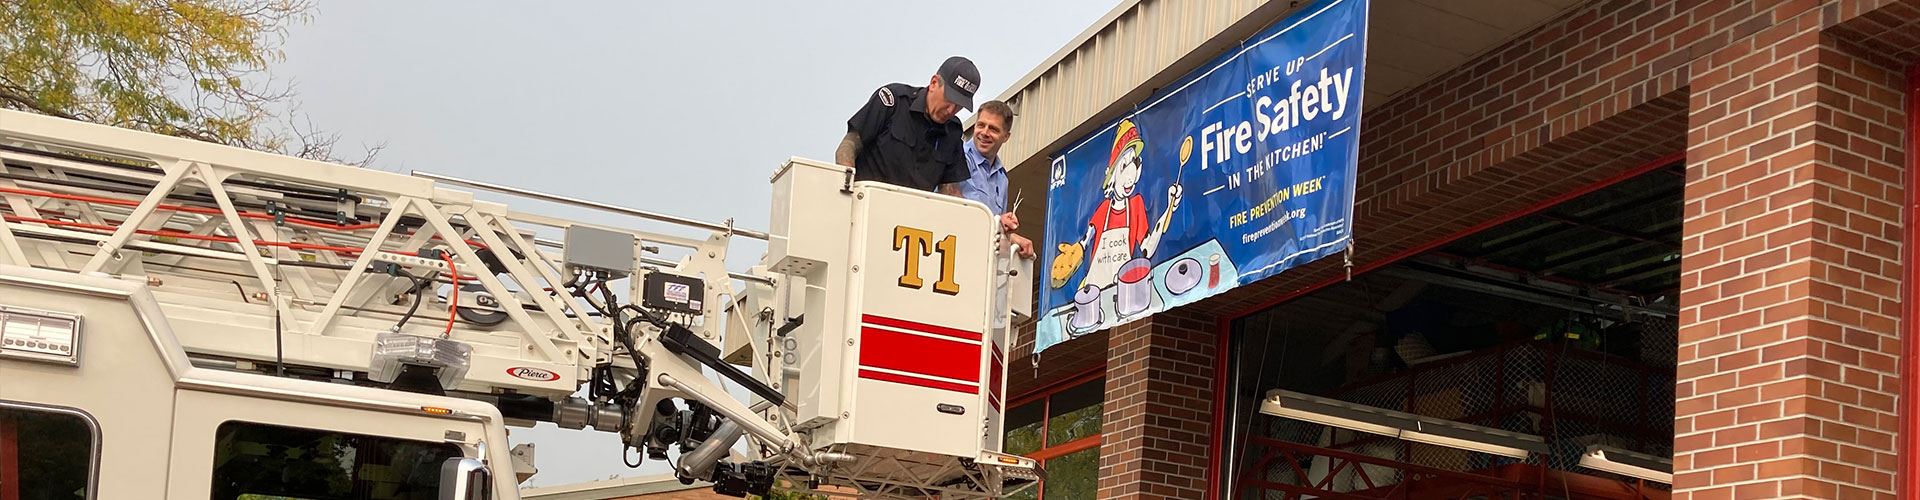 Firefighters on truck ladder installing fire prevention week banner